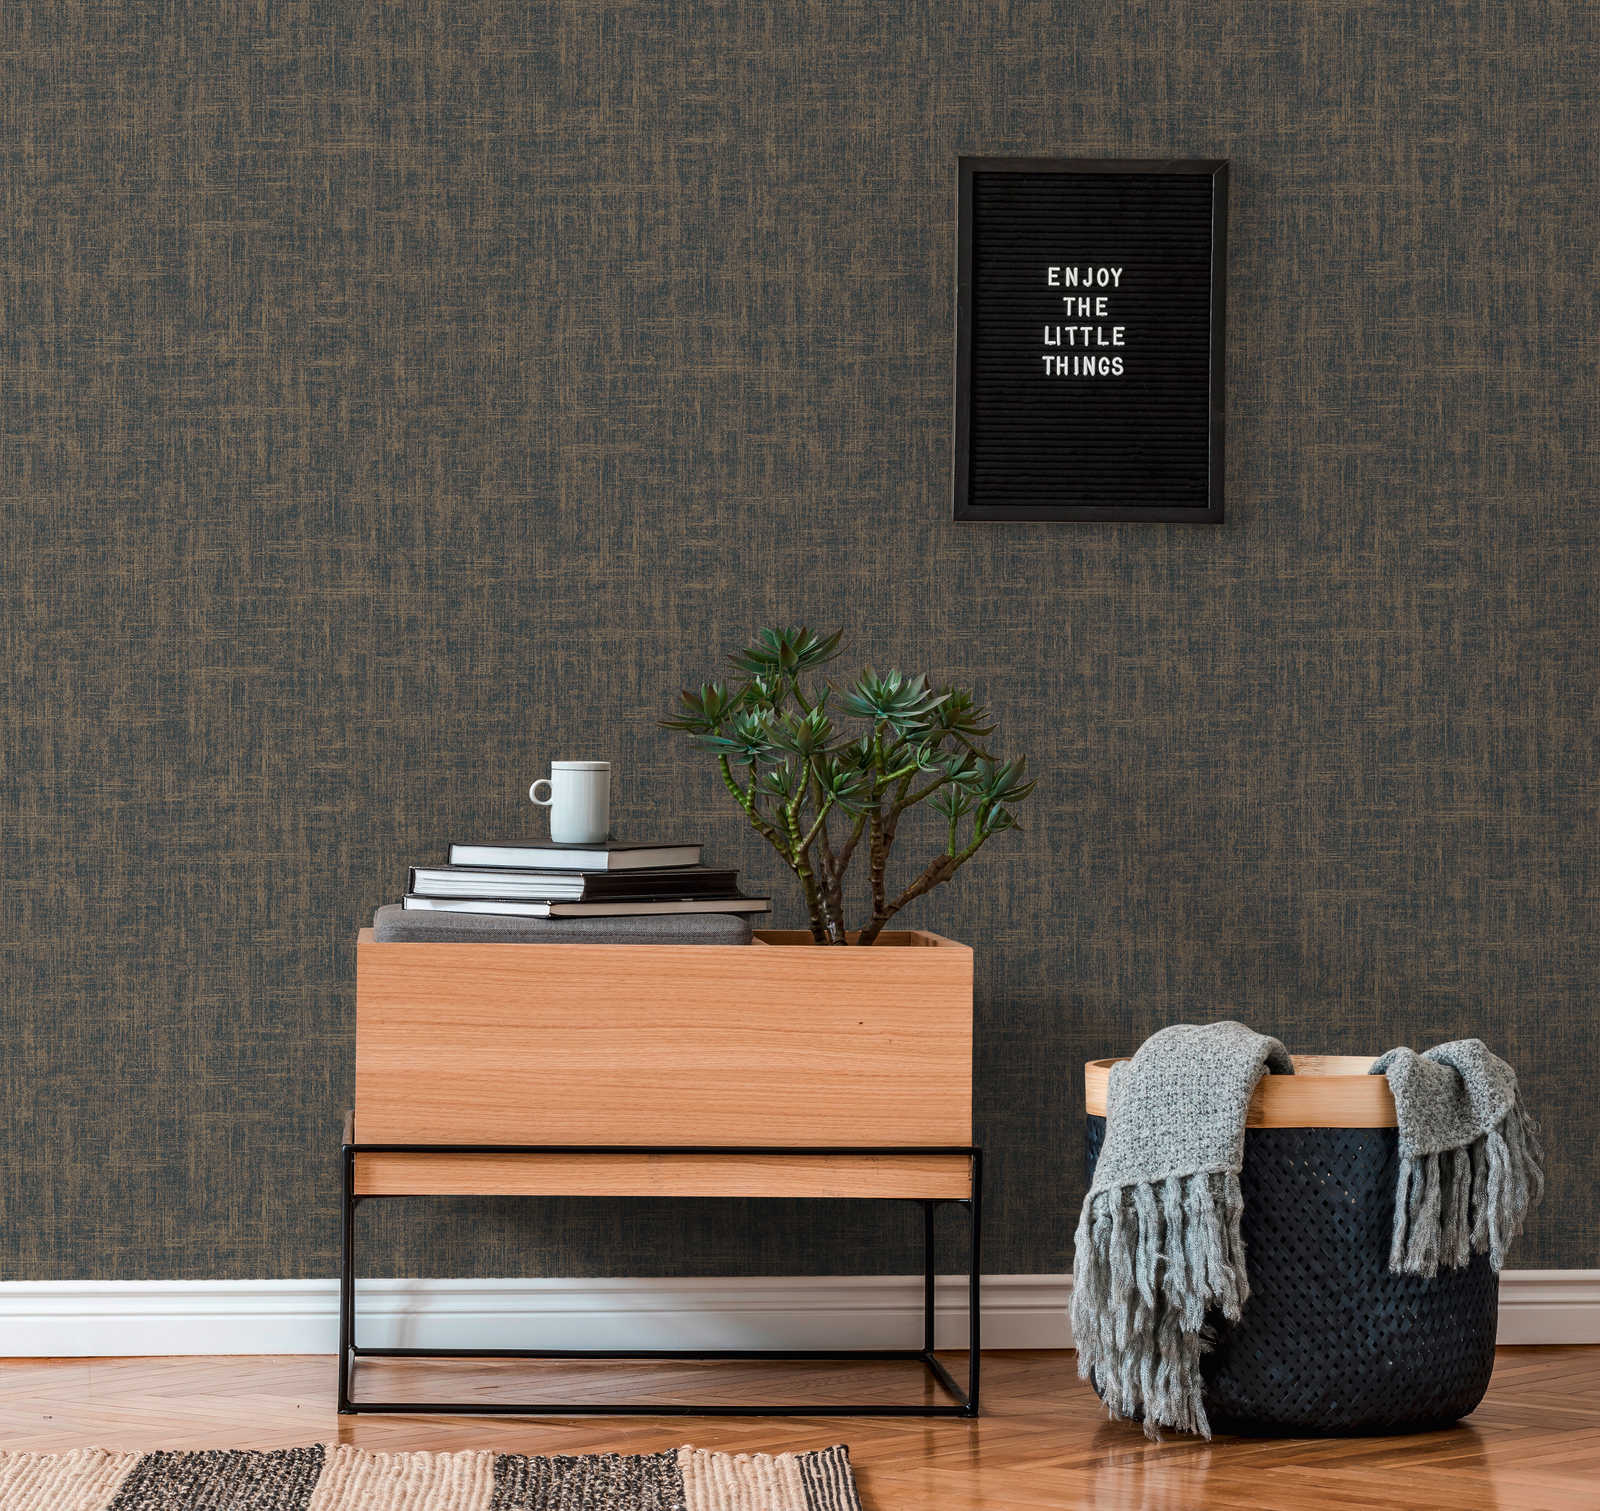             Non-woven wallpaper with mottled metallic effect
        